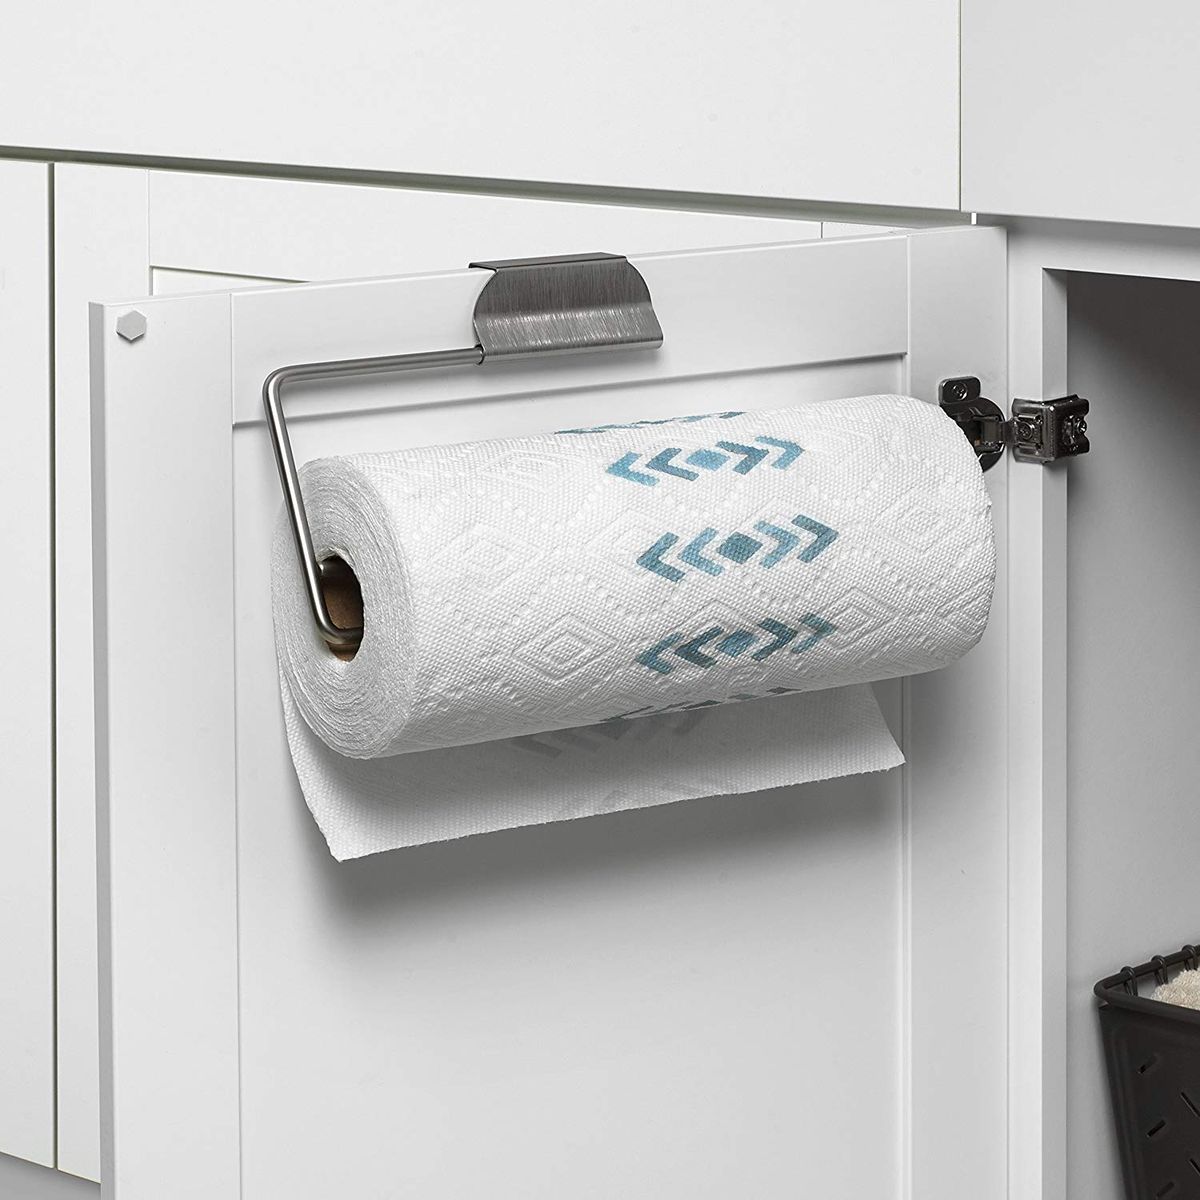 7 Best Paper Towel Holders To 2019, Vanity Top Hand Towel Stand